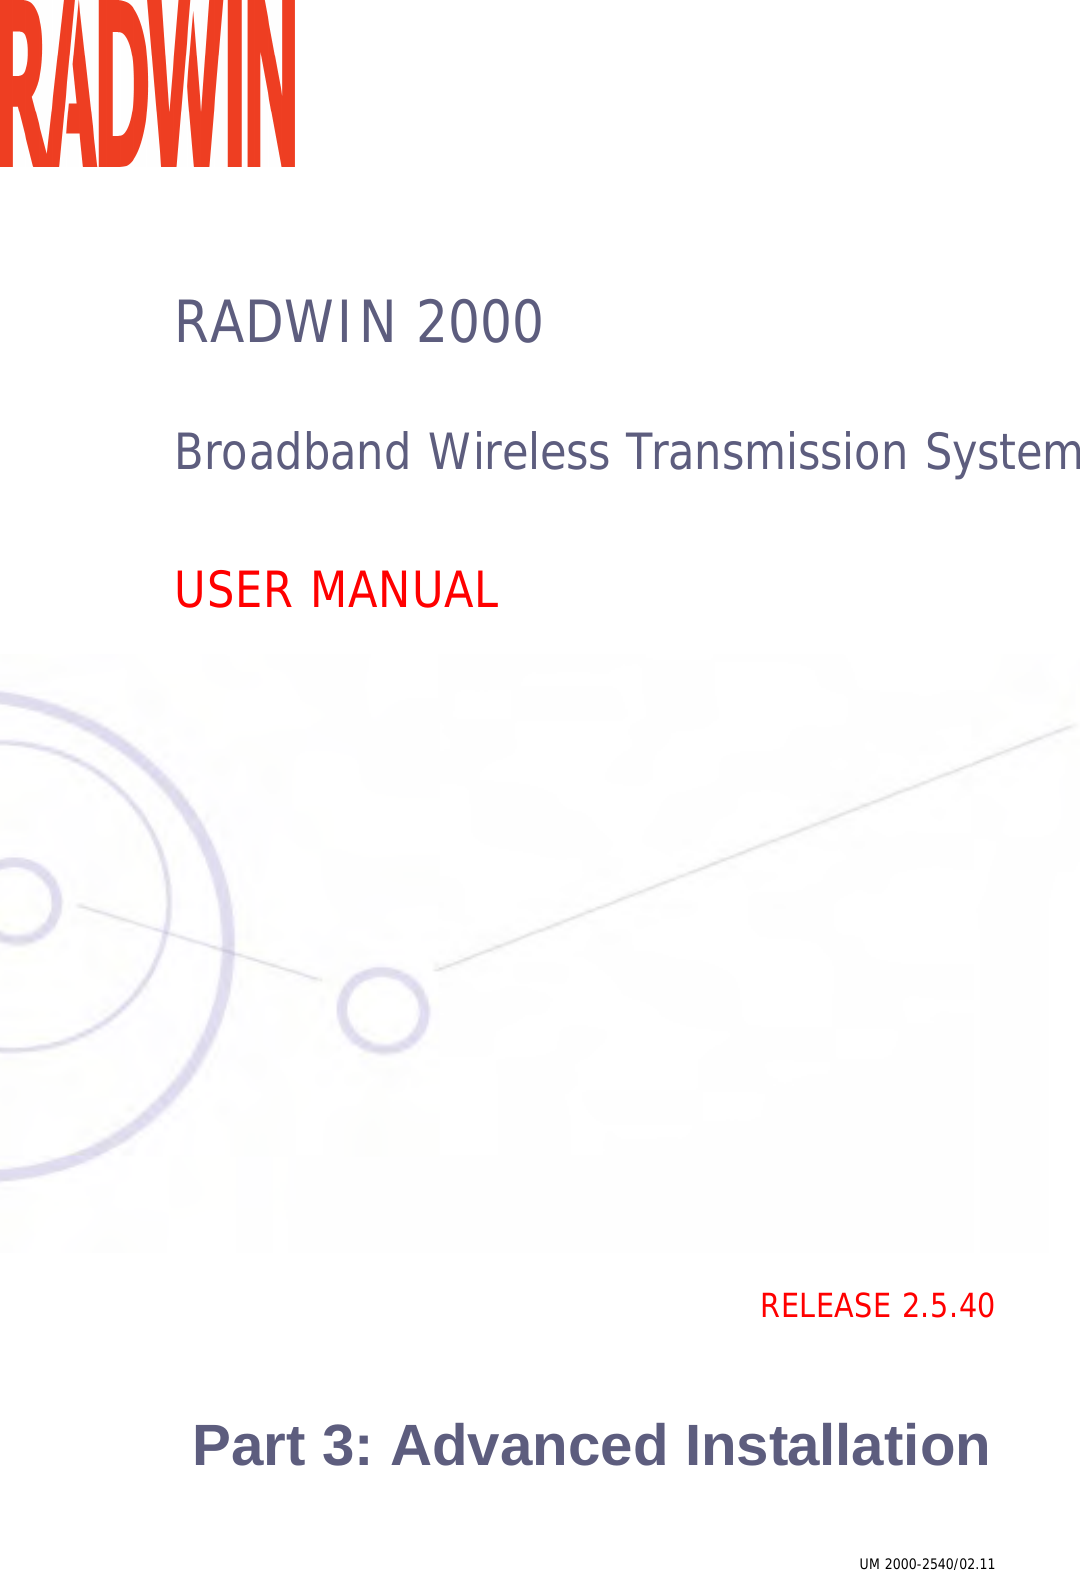 RADWIN 2000Broadband Wireless Transmission SystemUSER MANUALRELEASE 2.5.40Part 3: Advanced InstallationUM 2000-2540/02.11